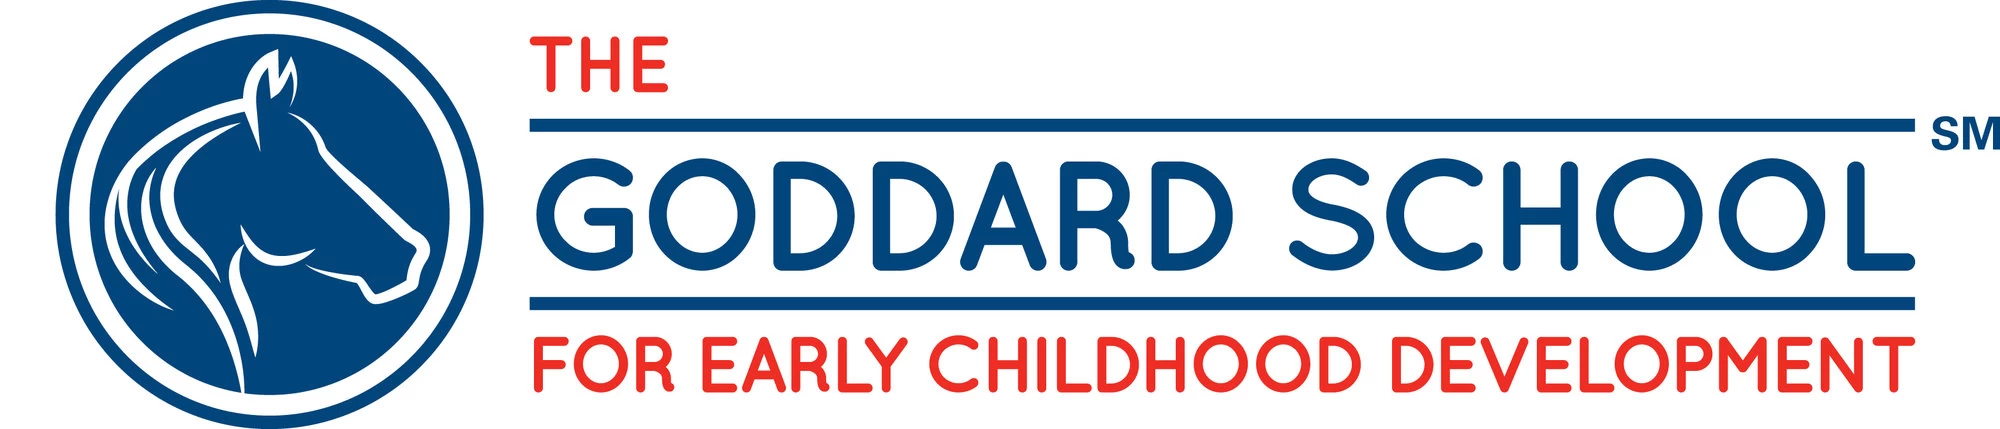 The Goddard School Franchise Logo